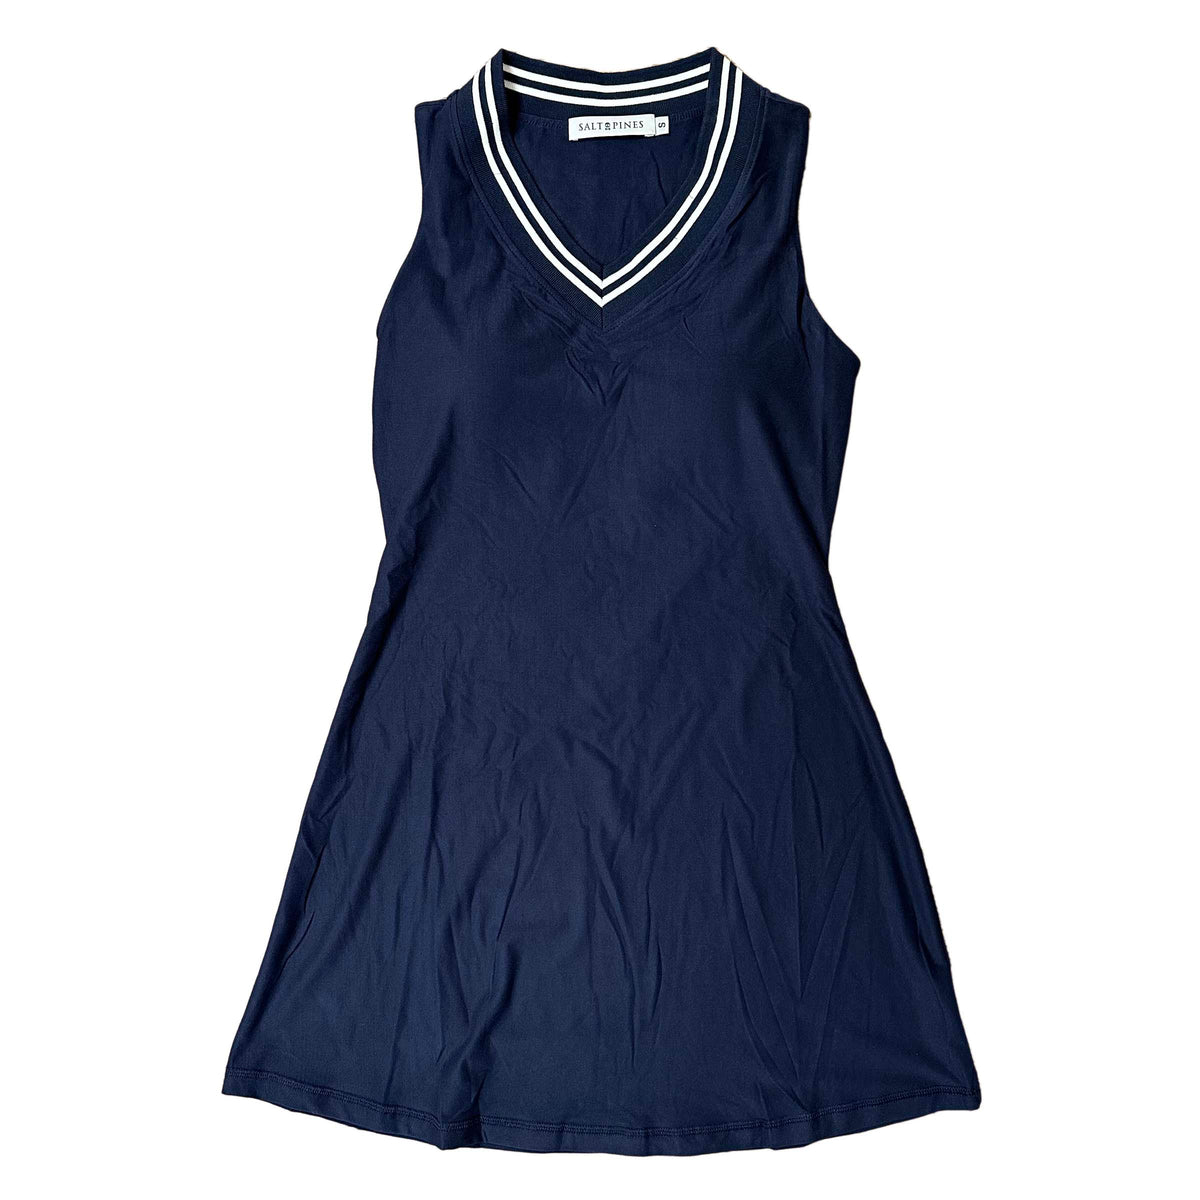 PiraTec Tennis Dress